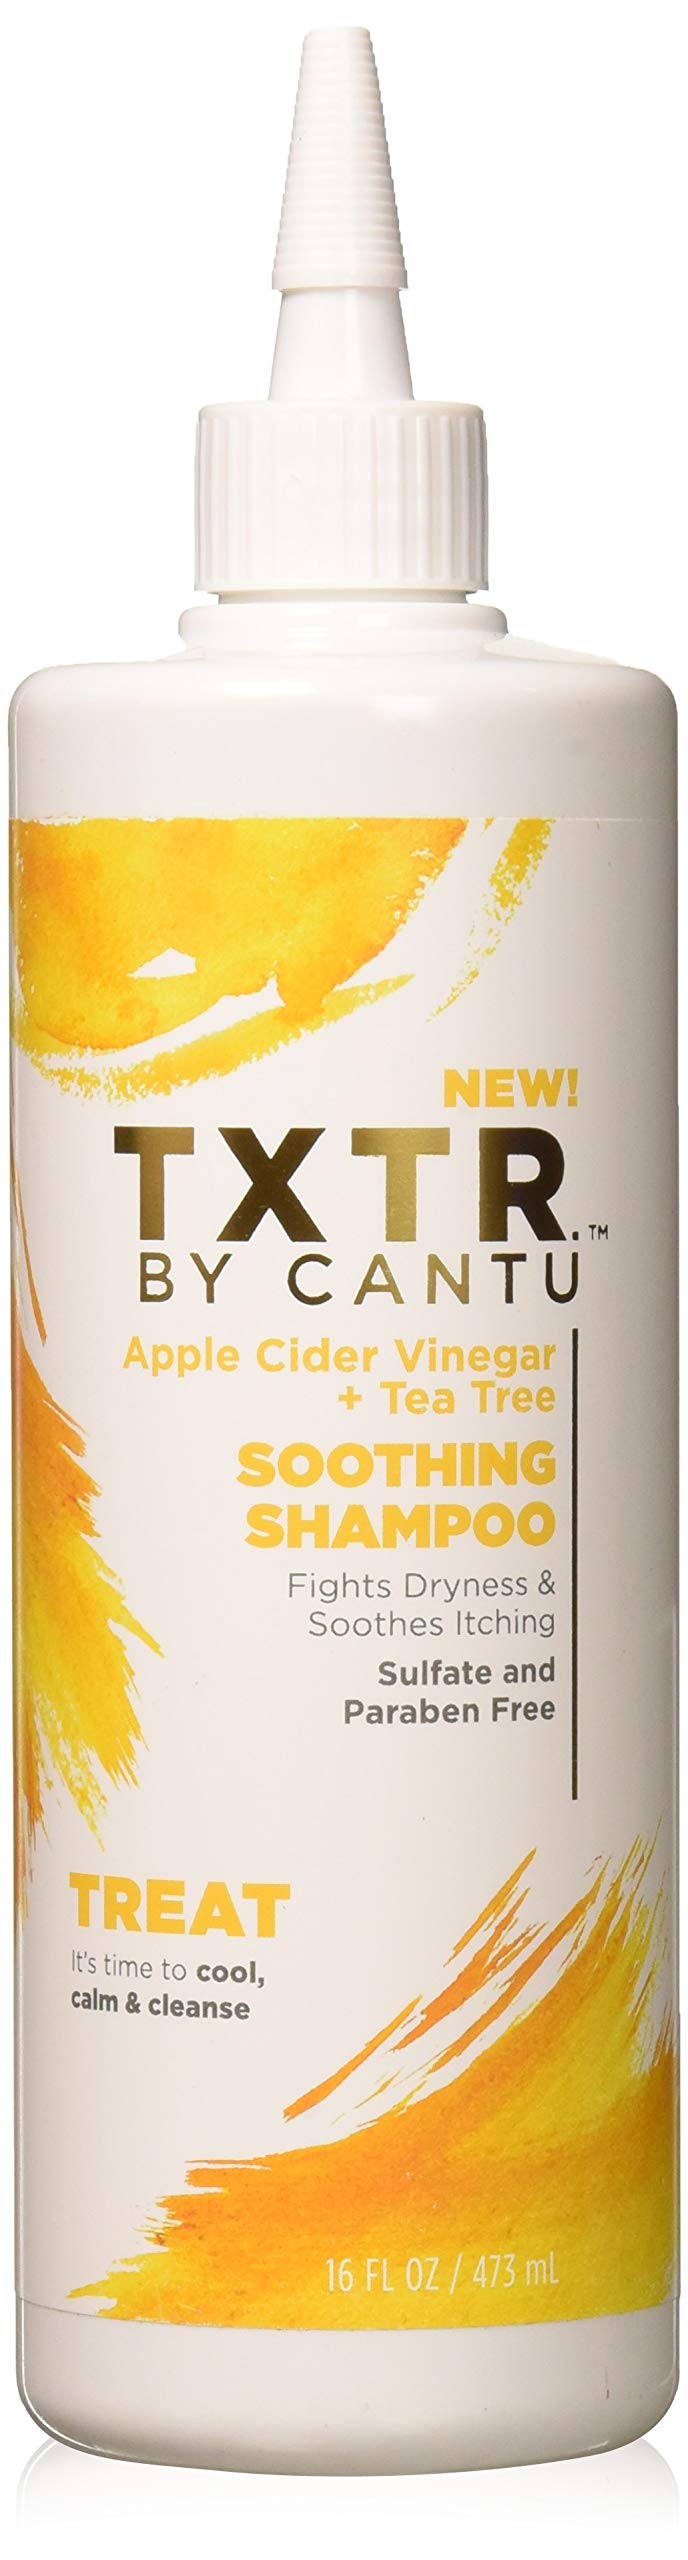 Cantu Txtr By Apple Cider Vinegar + Tea Tree Soothing Shampoo - 16 Fl Oz, 16 Oz